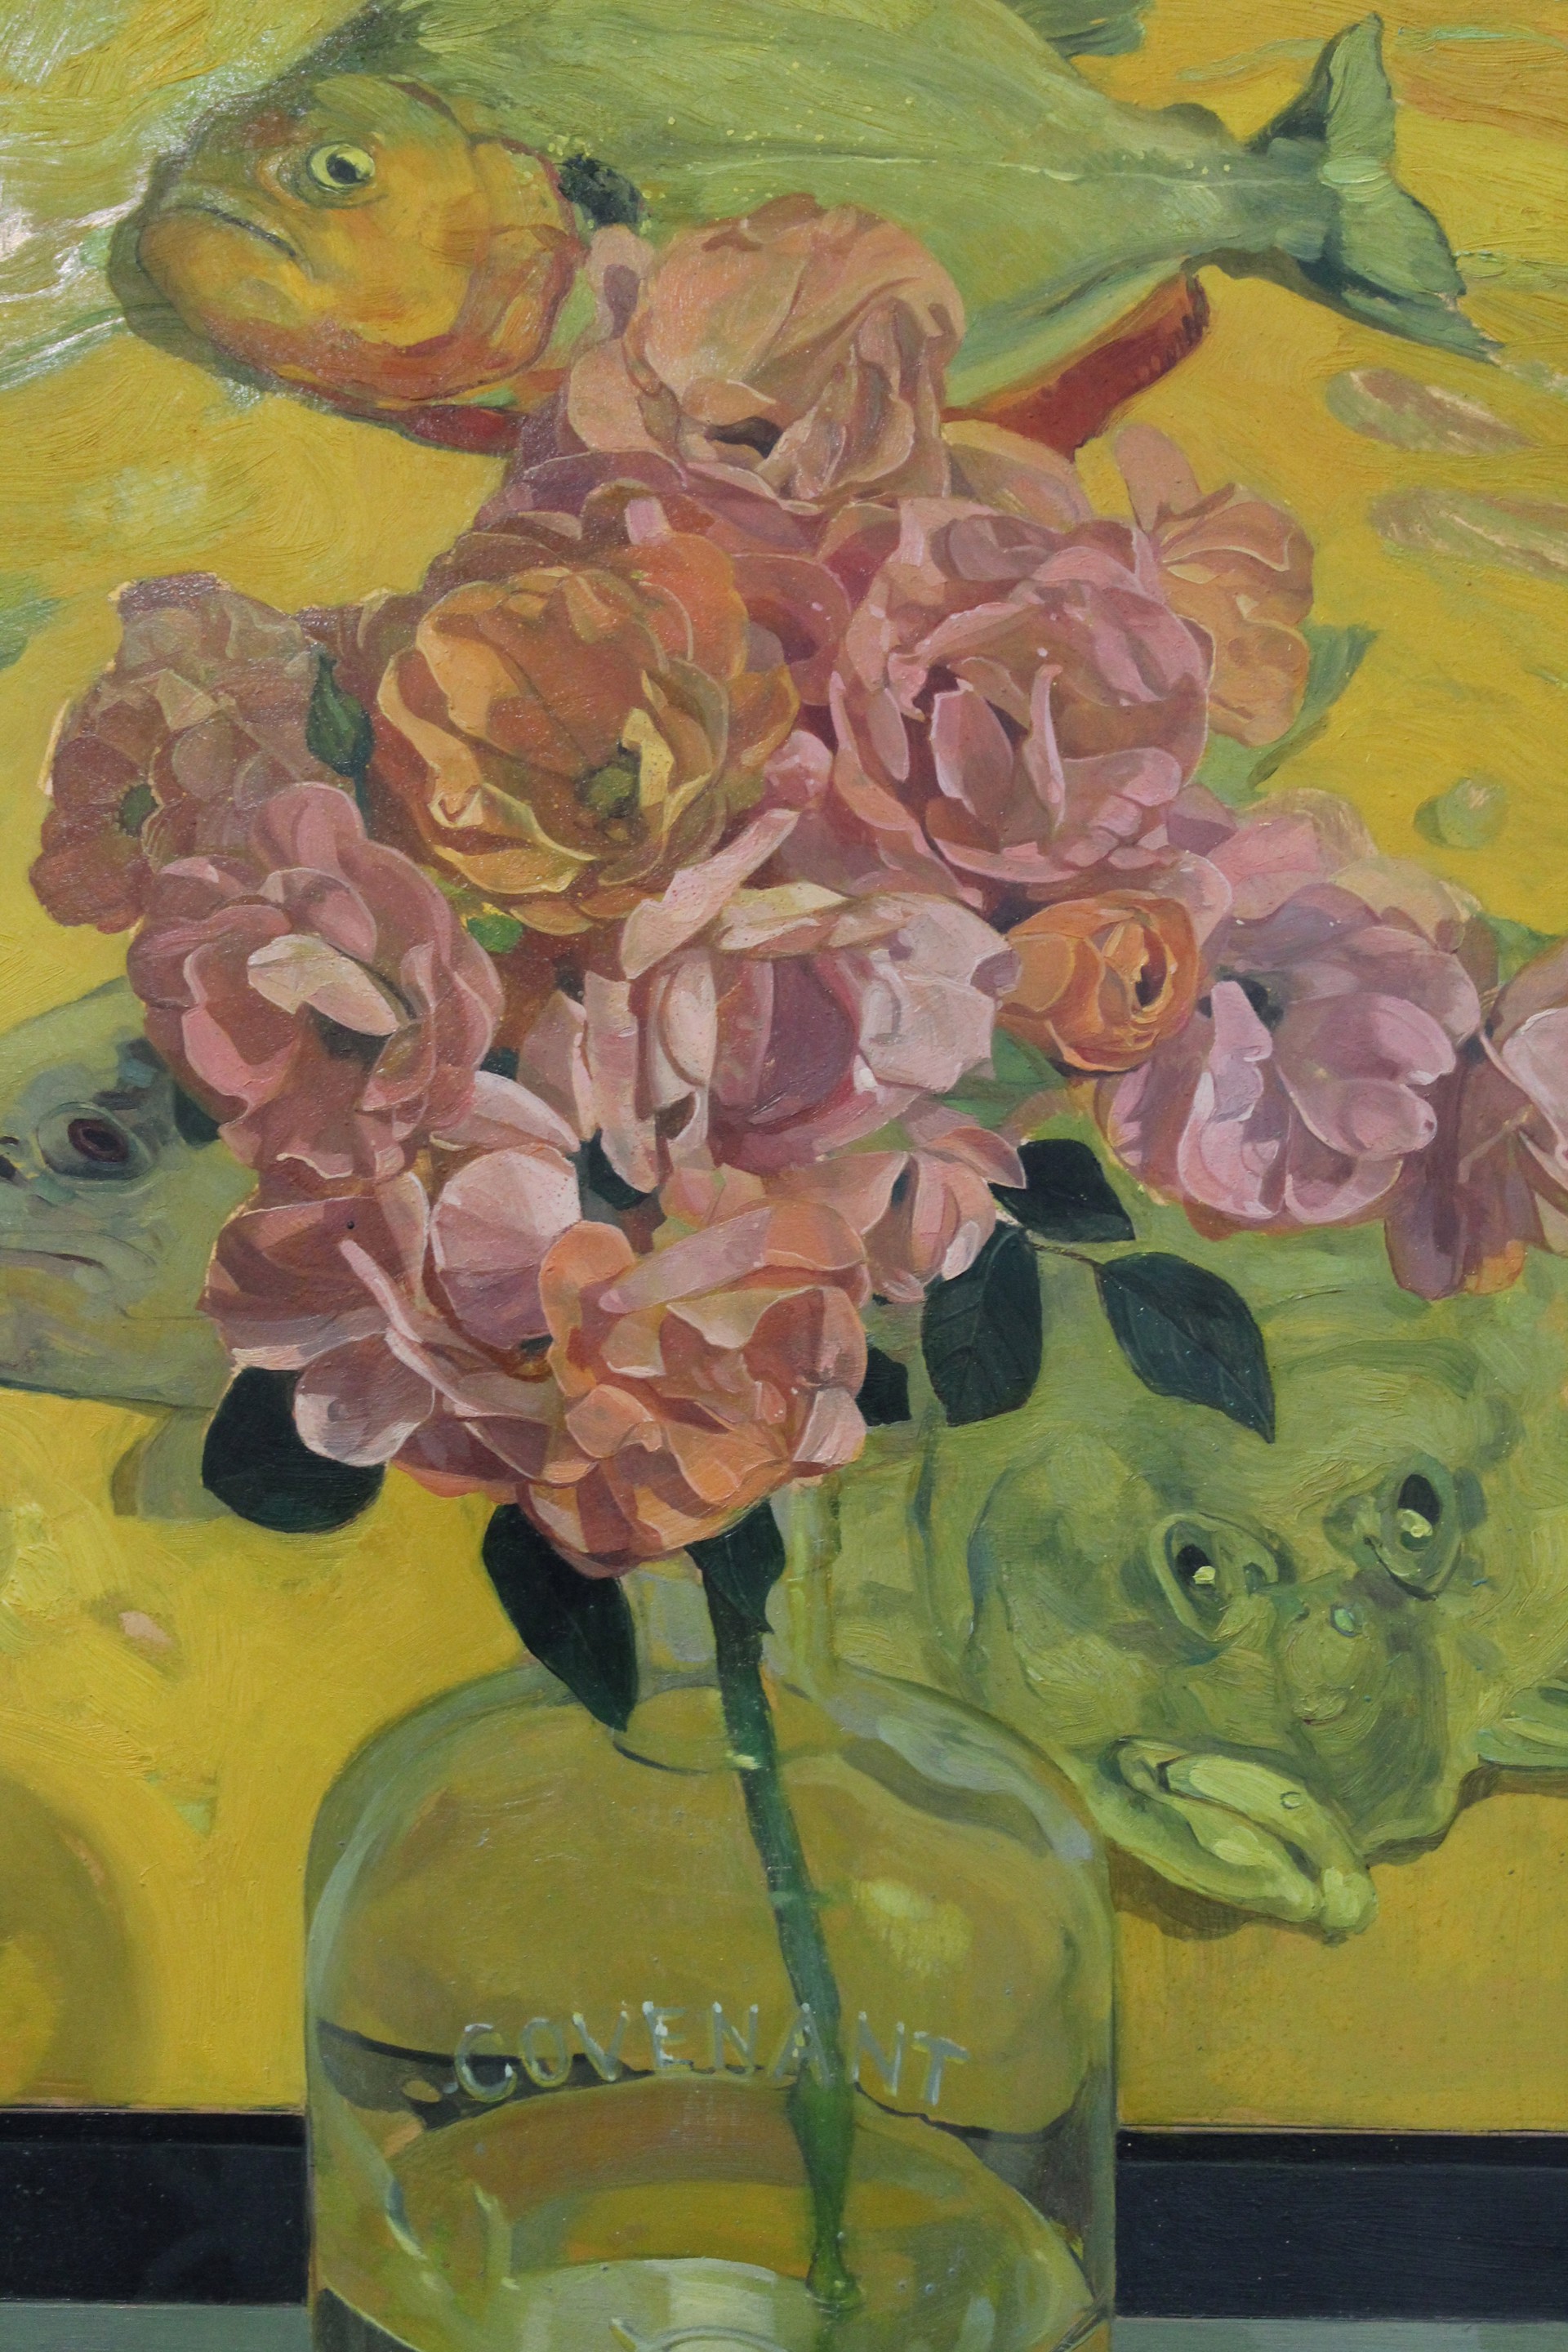 Roses with Piranha by Benjamin J. Shamback